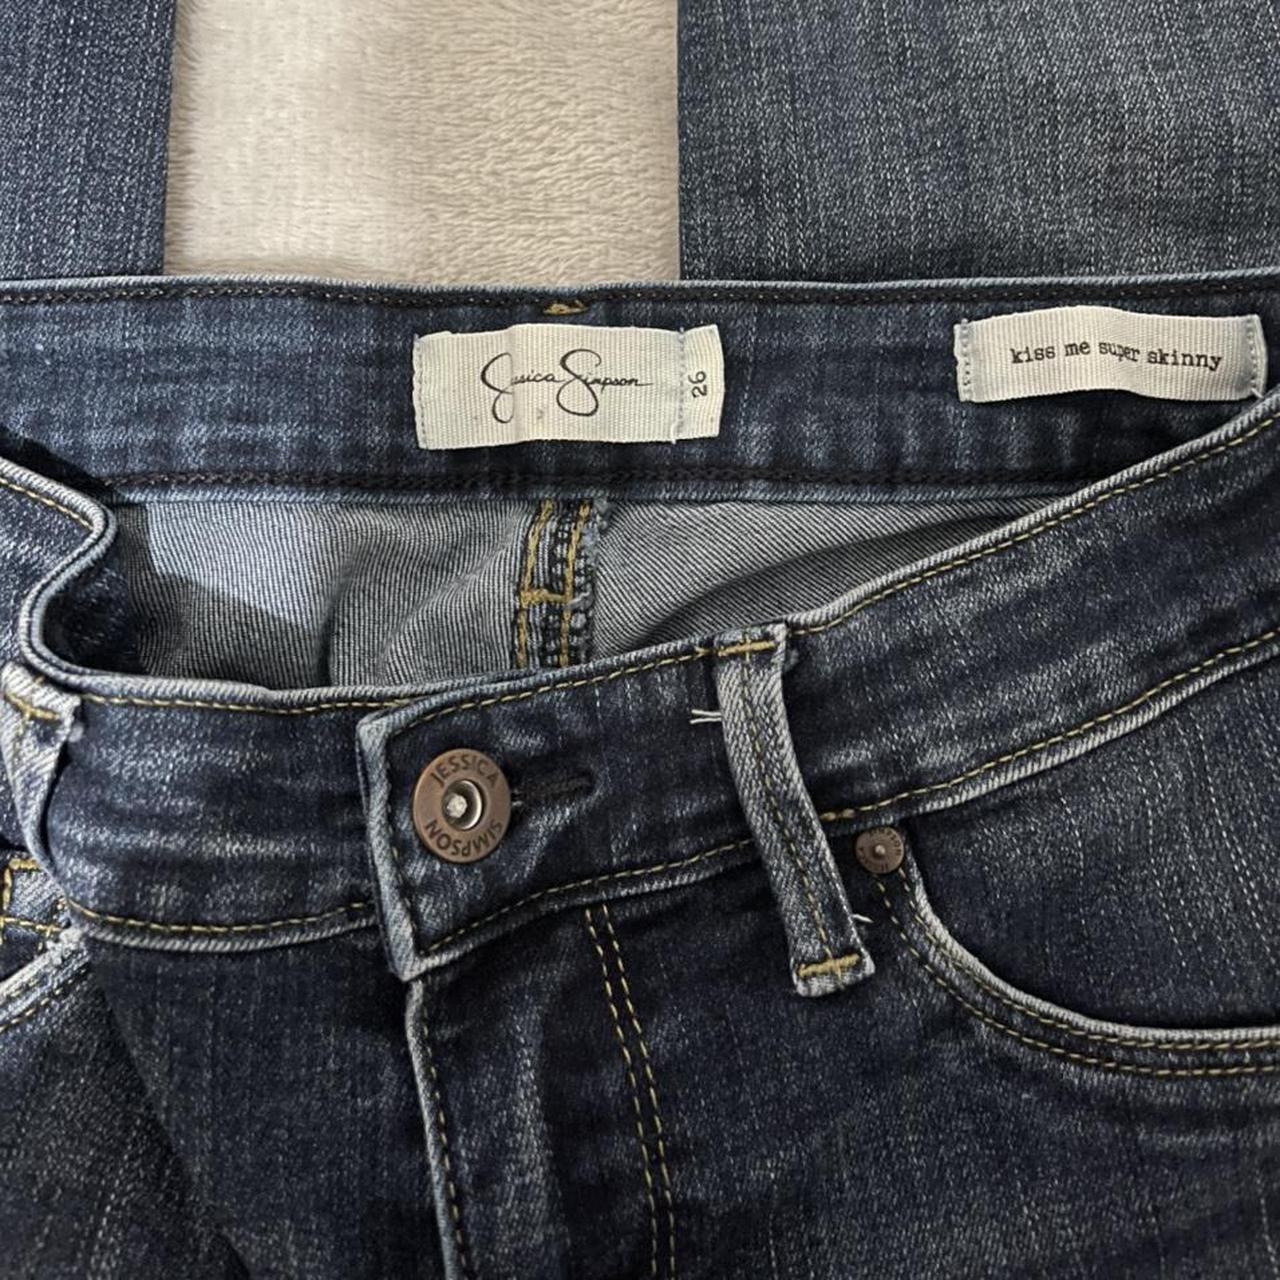 Jessica Simpson super skinny jeans Only has back... - Depop